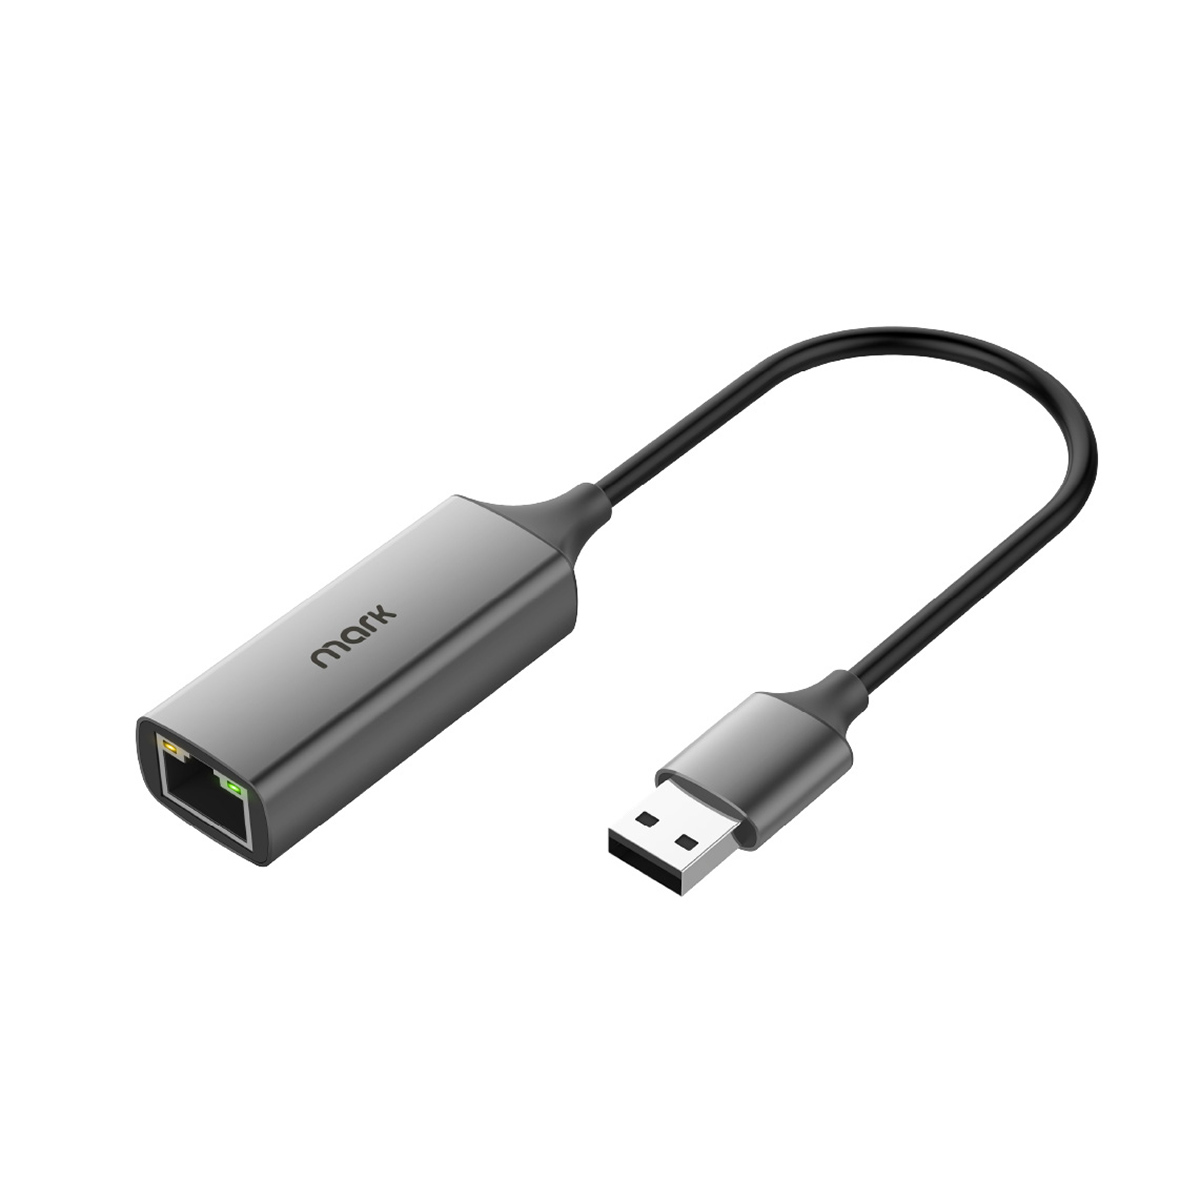 LAN Adapter,USB Extension,HDMI&VGA,Cable TYPE C,Charger,USB HUB,Cardreader,USB Converter